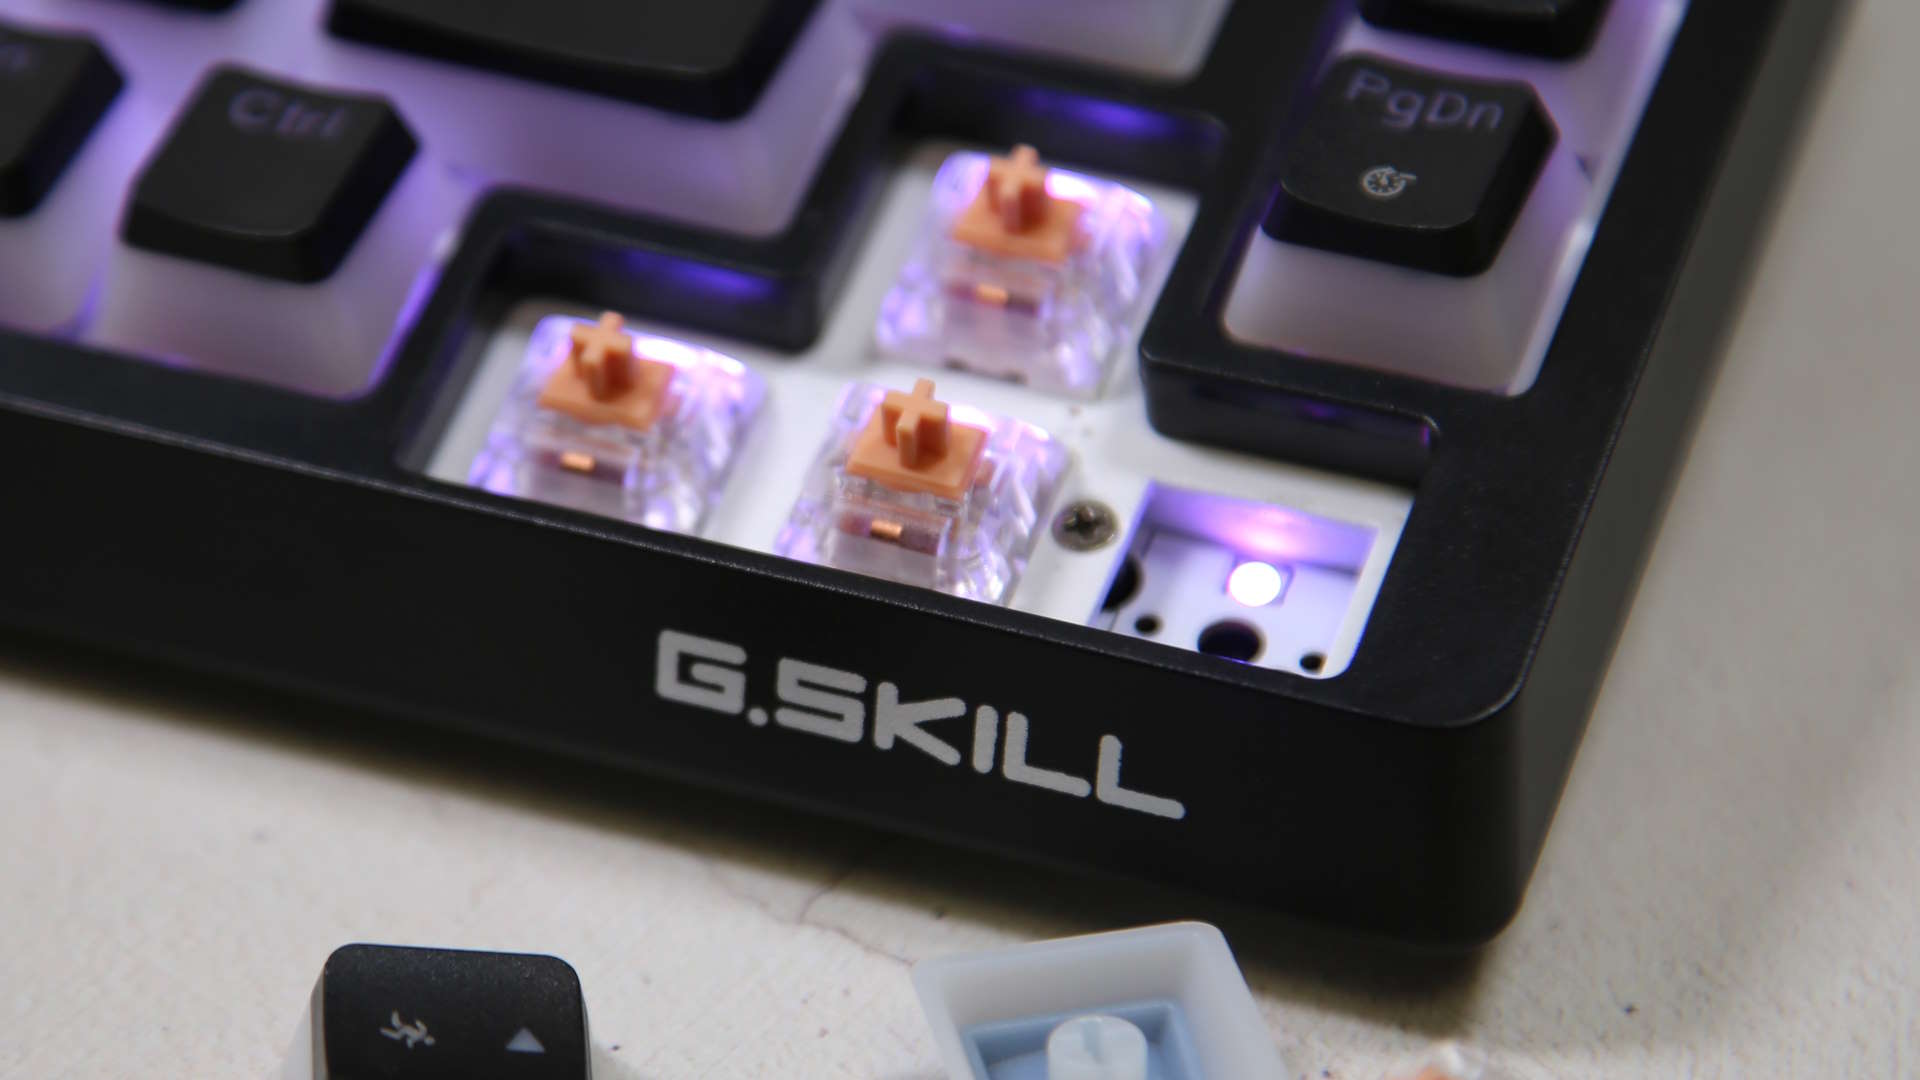 G.Skill KM250 RGB gaming keyboard